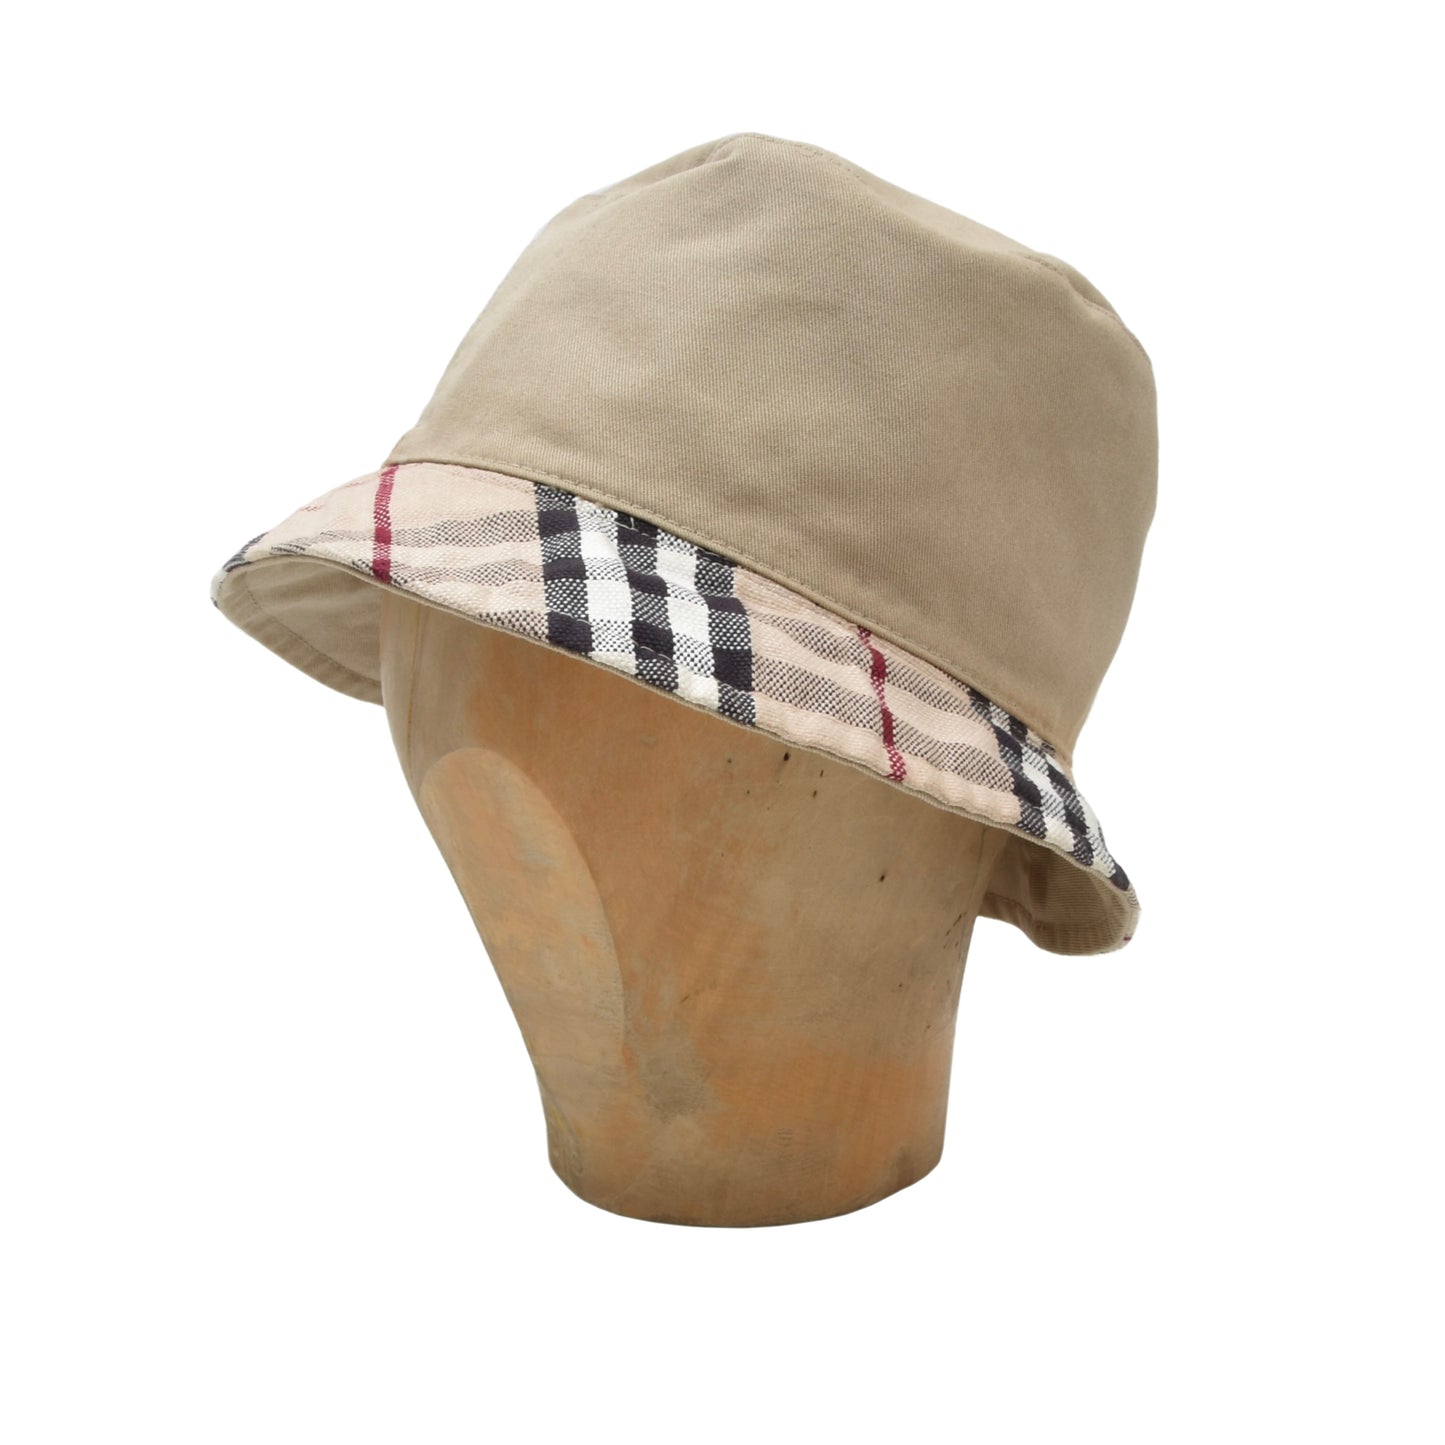 Burberry London Reversible Bucket Hat - Beige/Novacheck